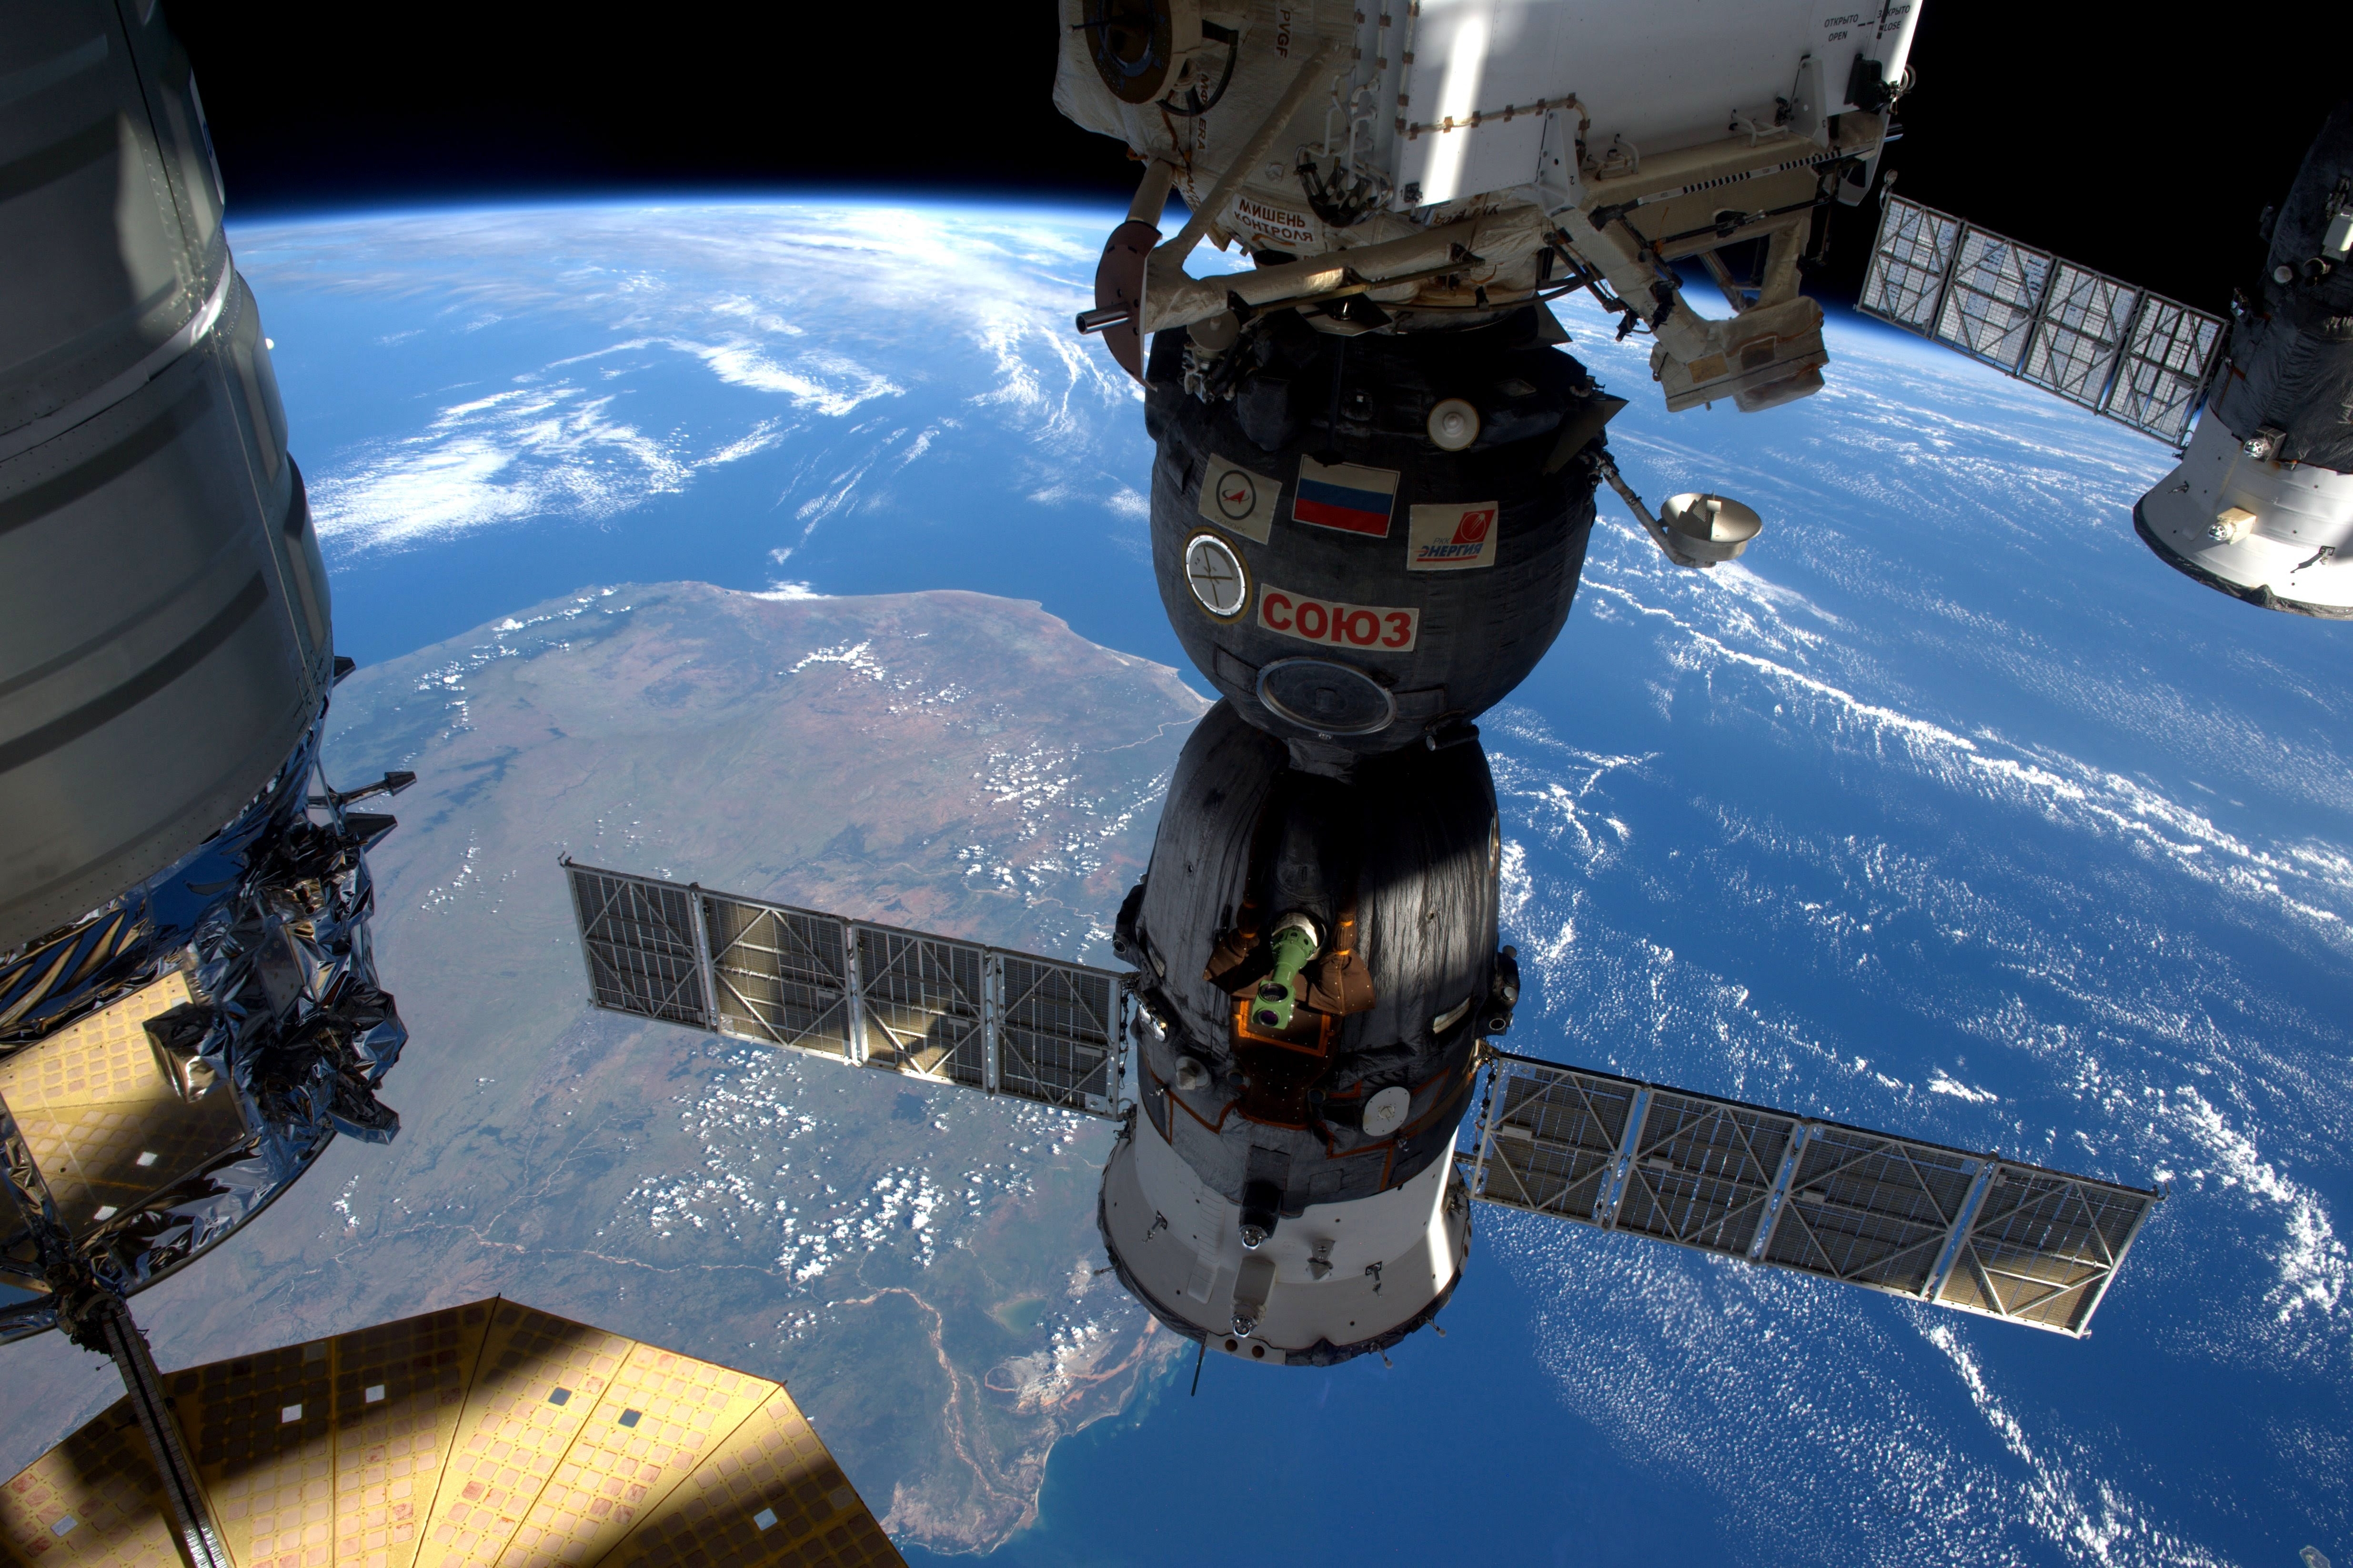 Space station marks milestone: 100,000th orbit of Earth - CBS News